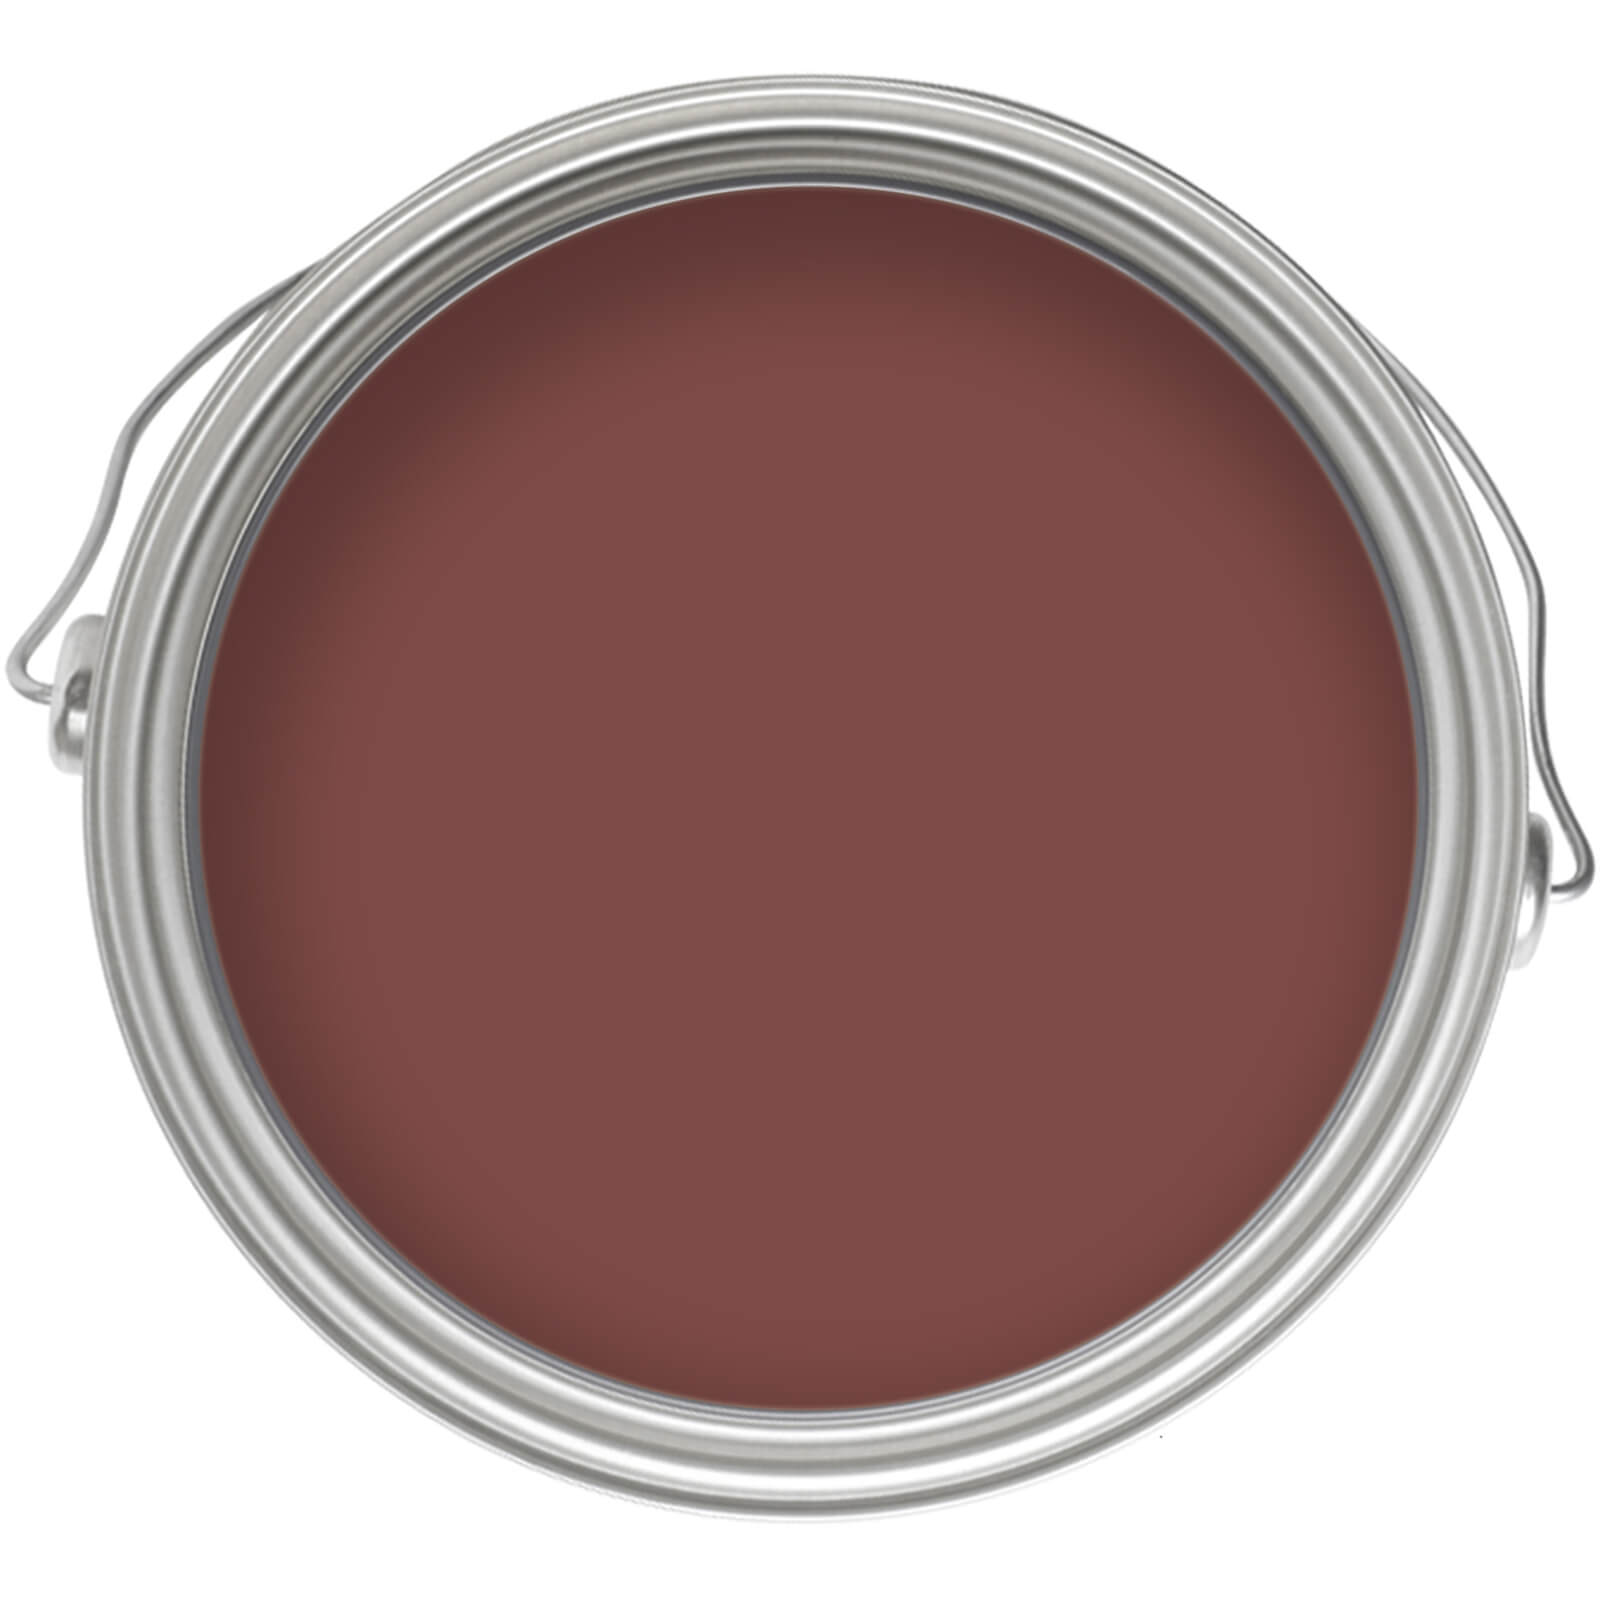 Homebase Smooth Masonry Colour Paint Tester - Autumn 250ml